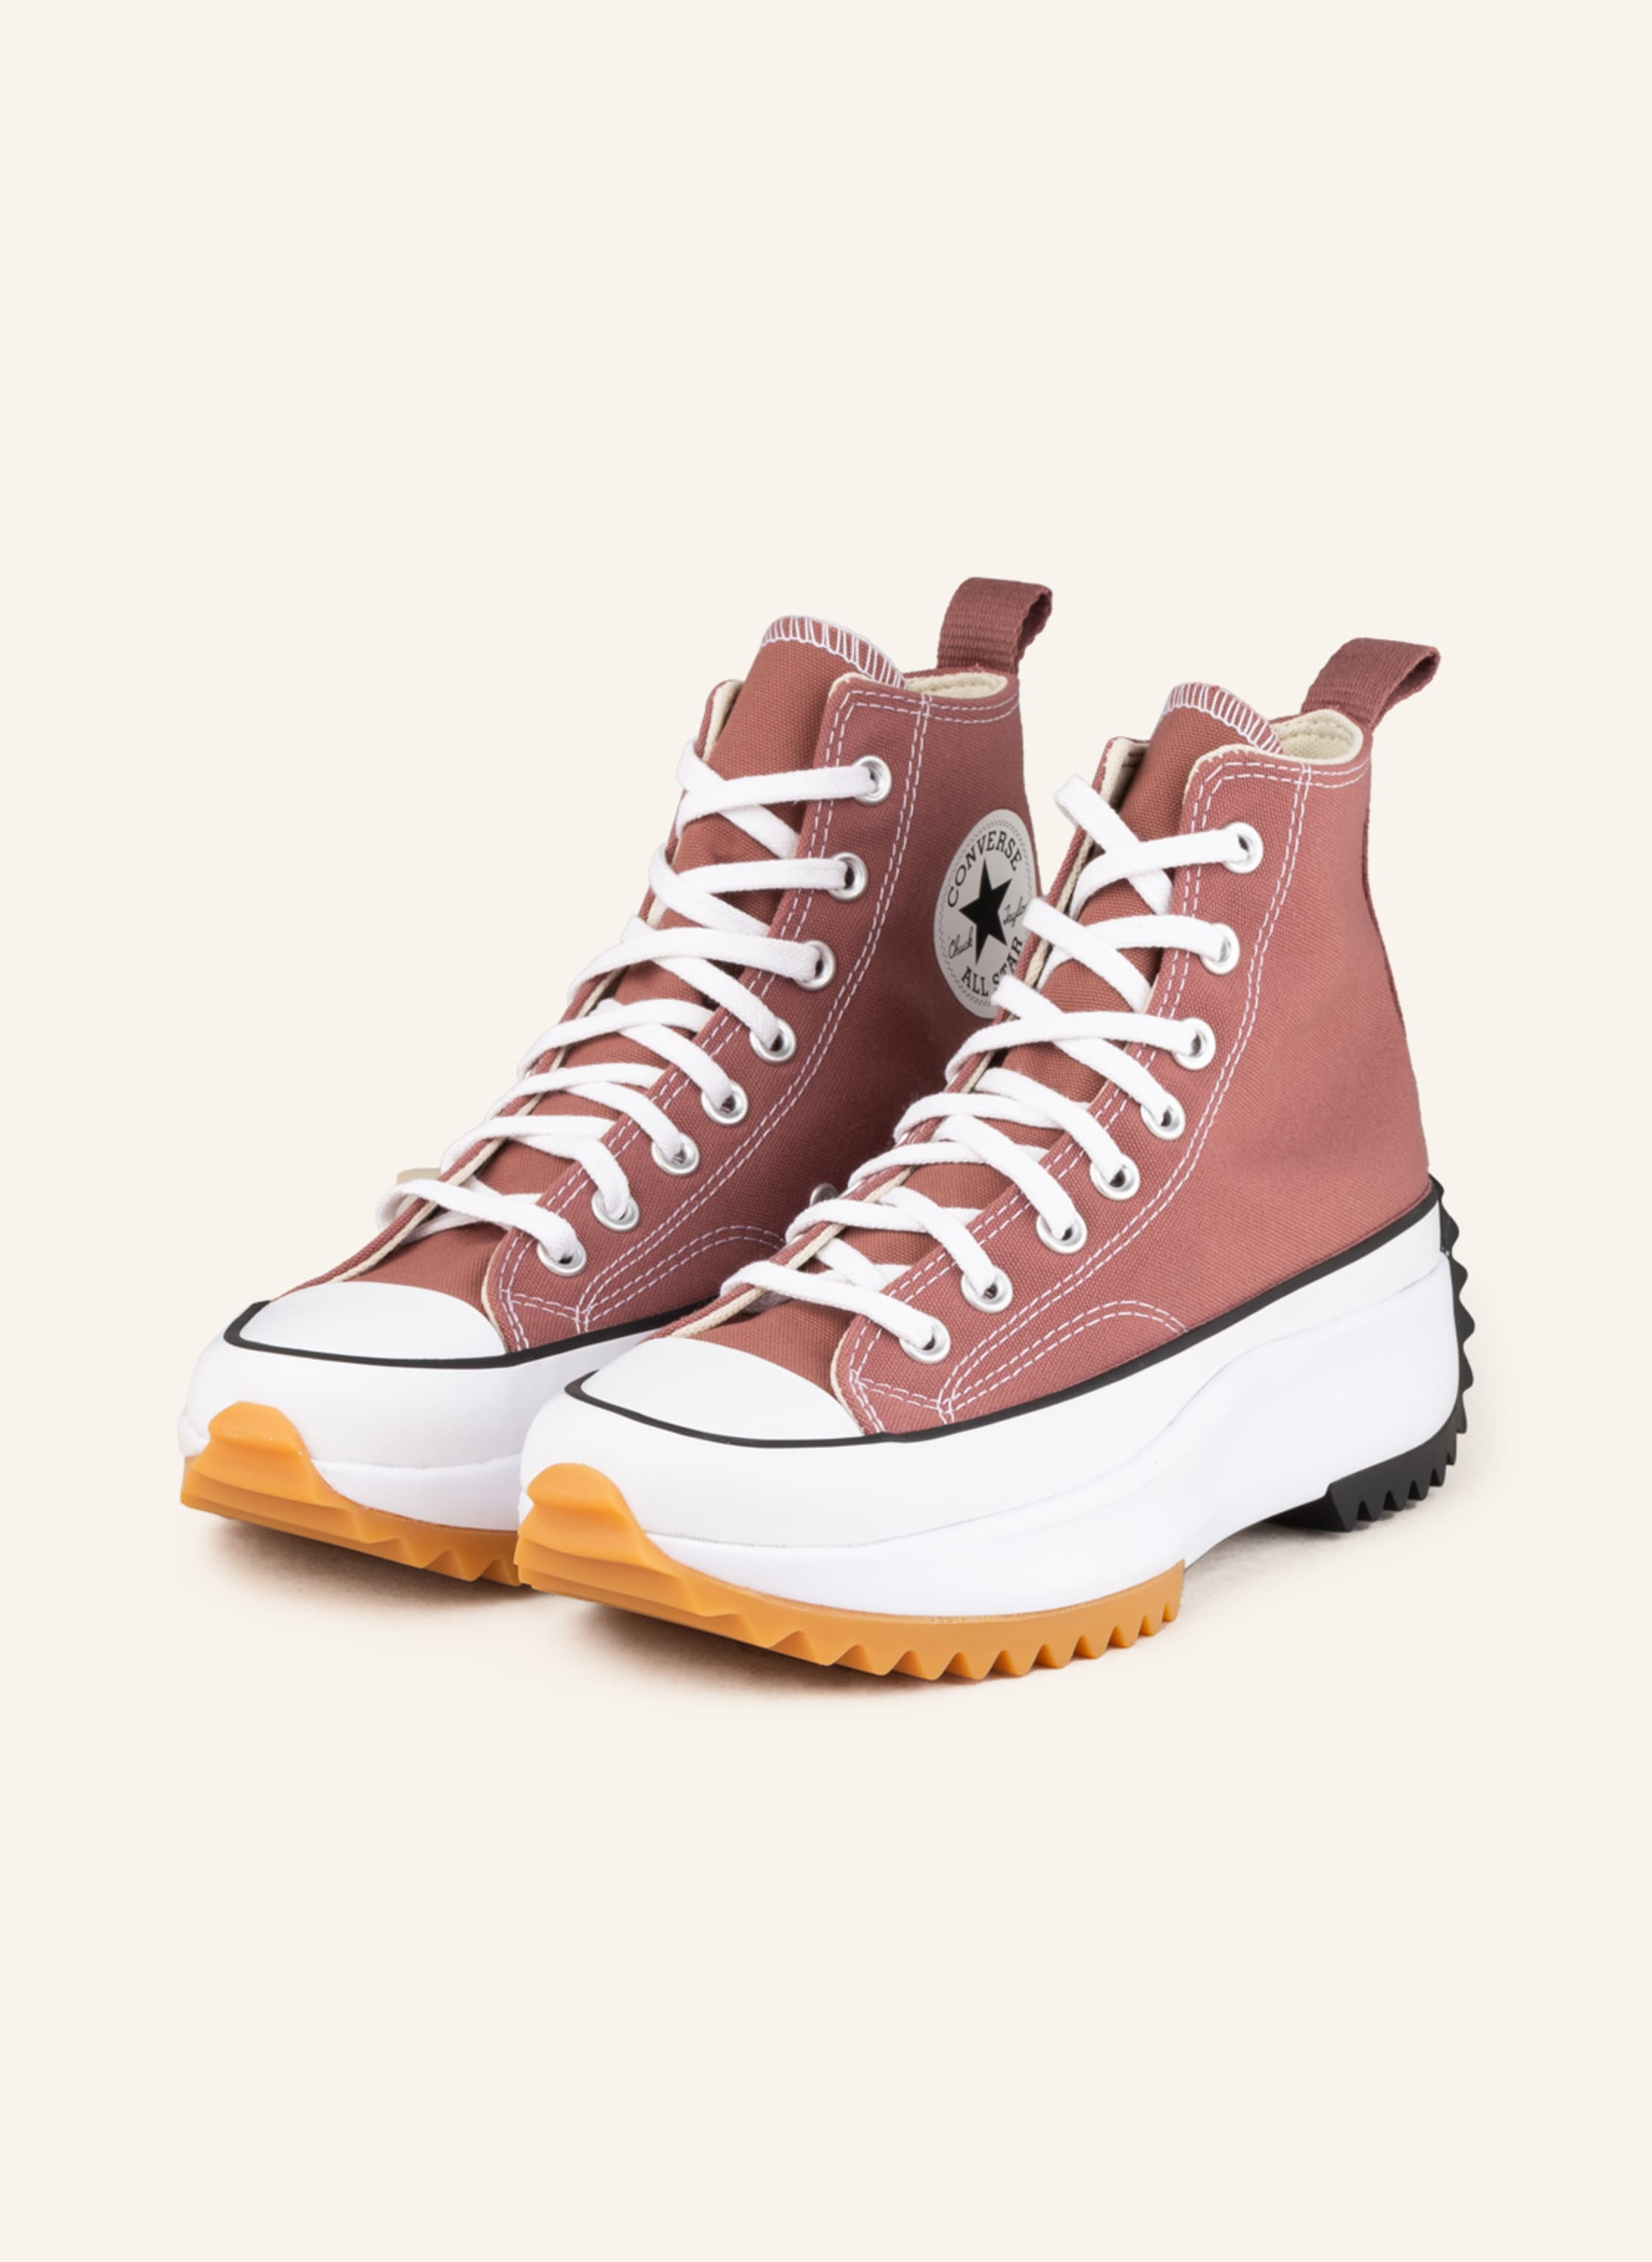 CONVERSE High-top sneakers RUN STAR HIKE in dusky pink | Breuninger